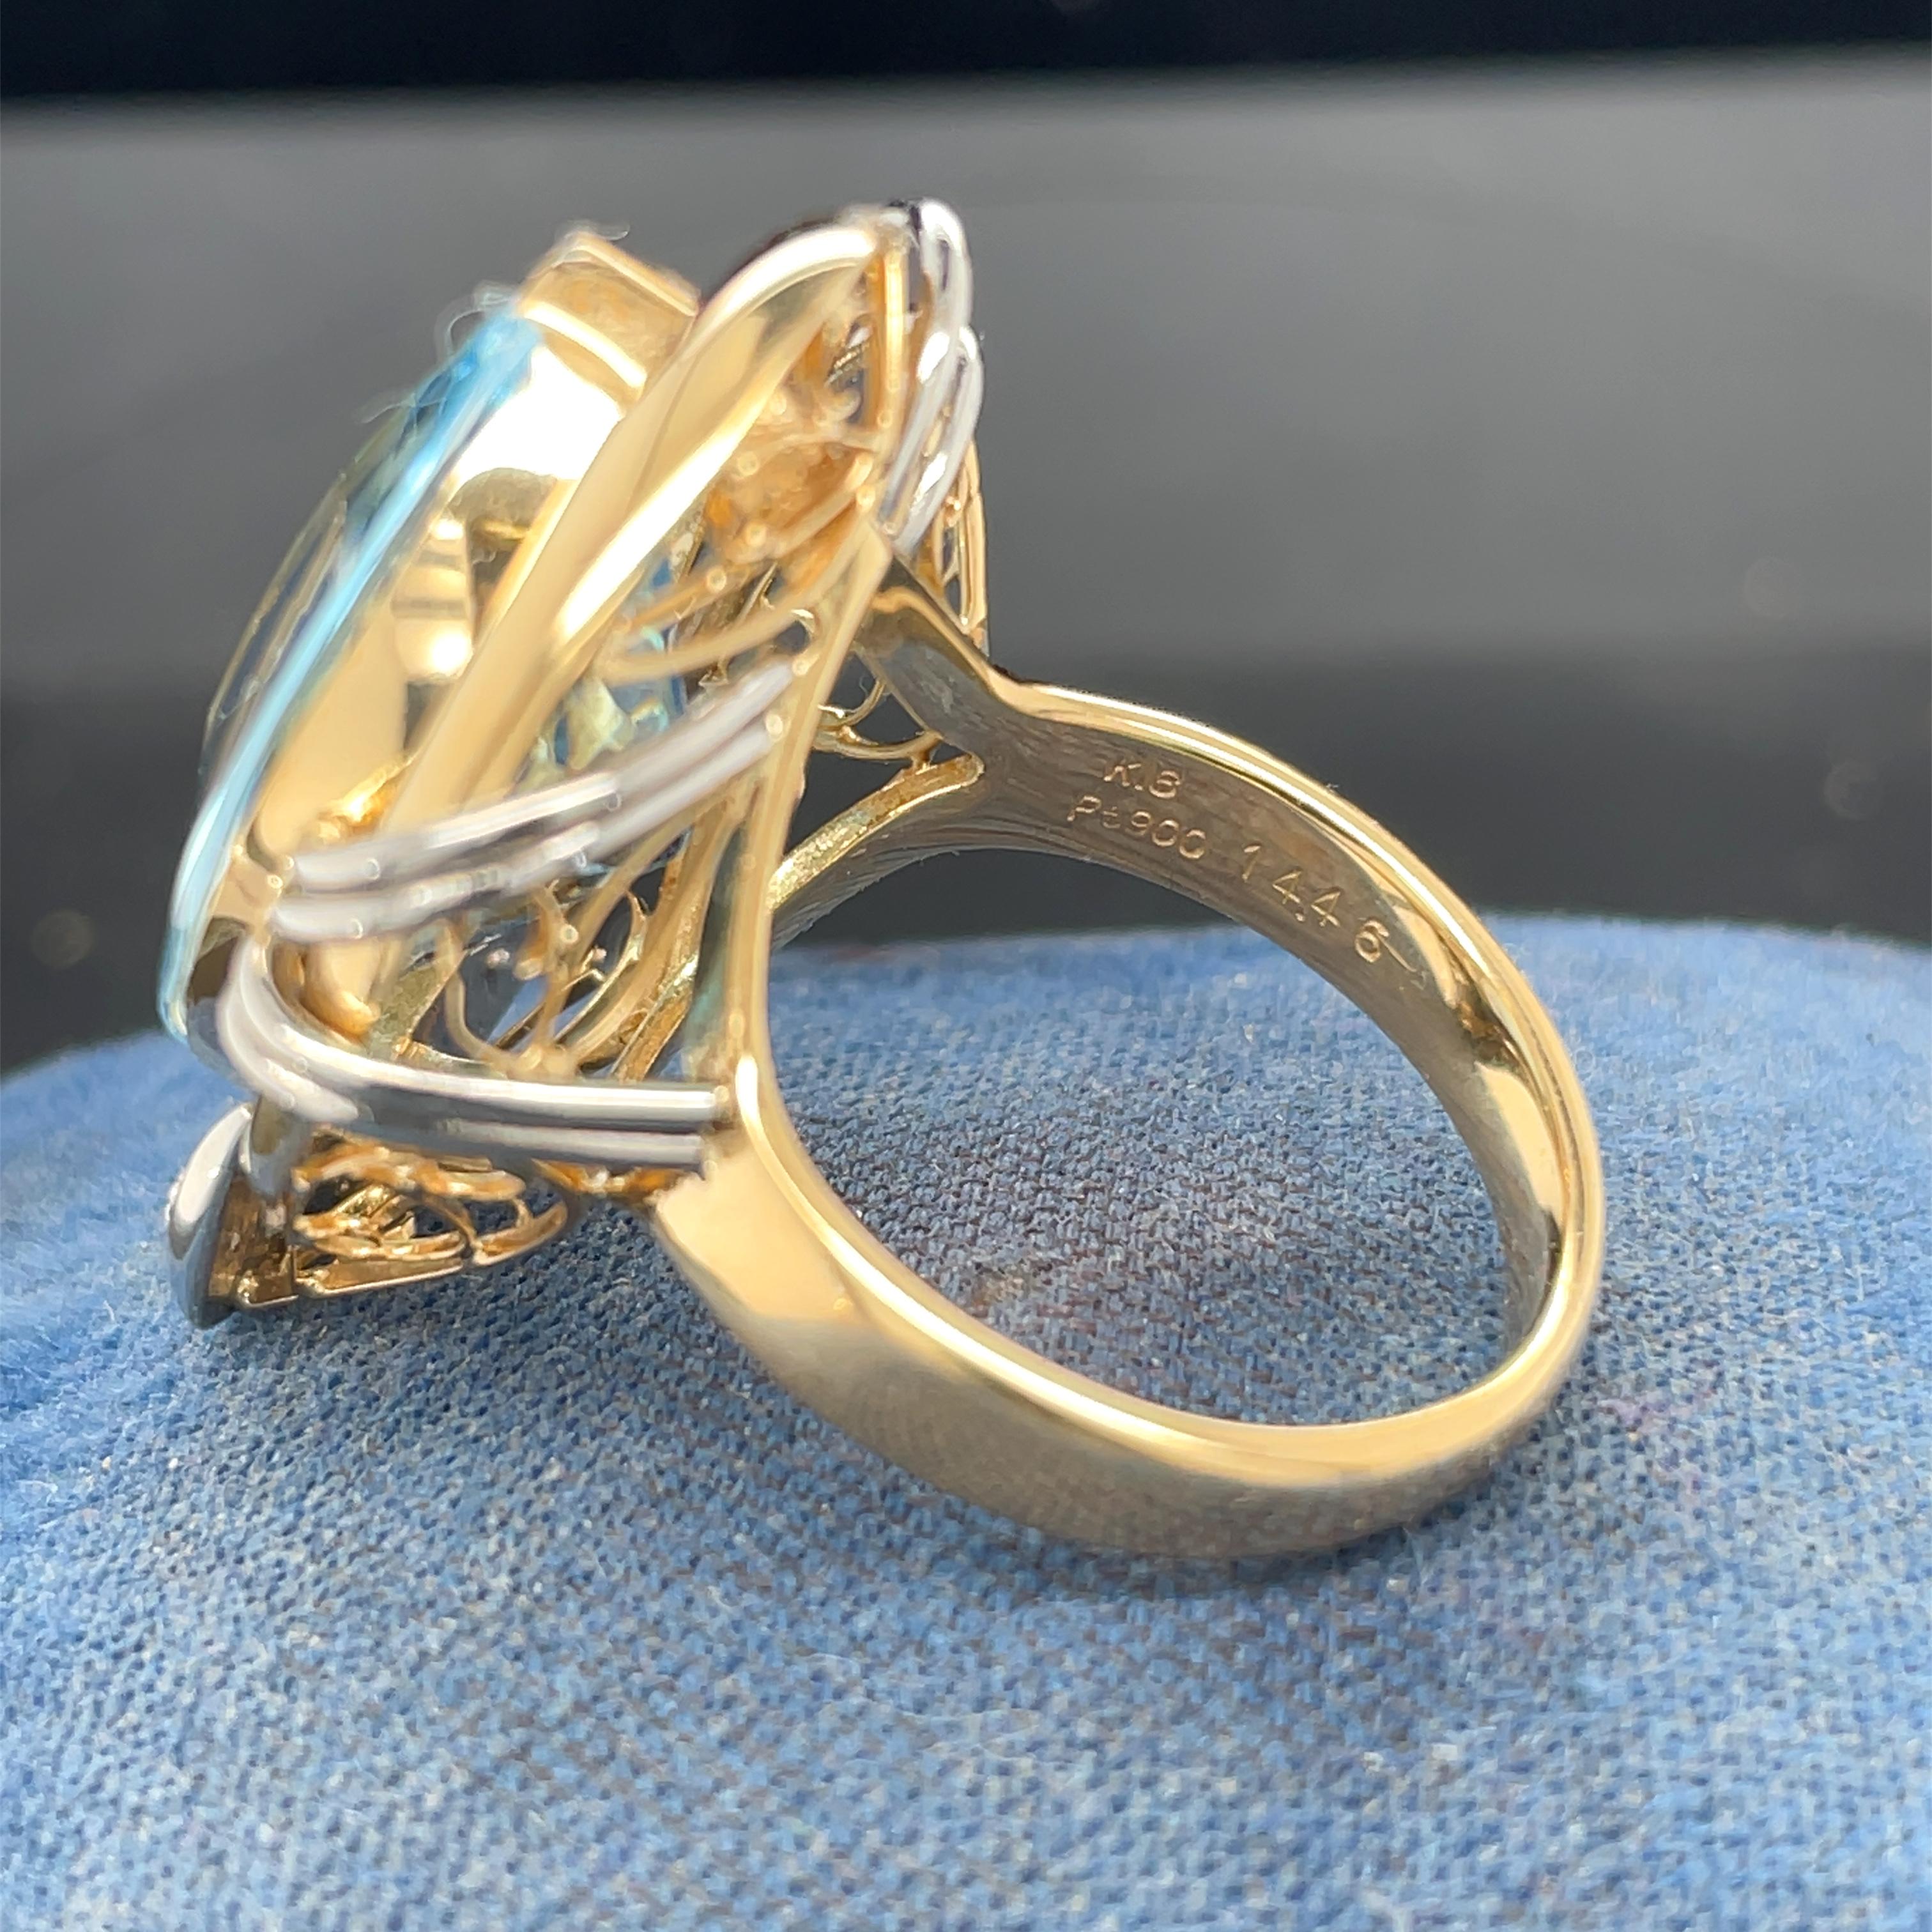 8k gold ring value